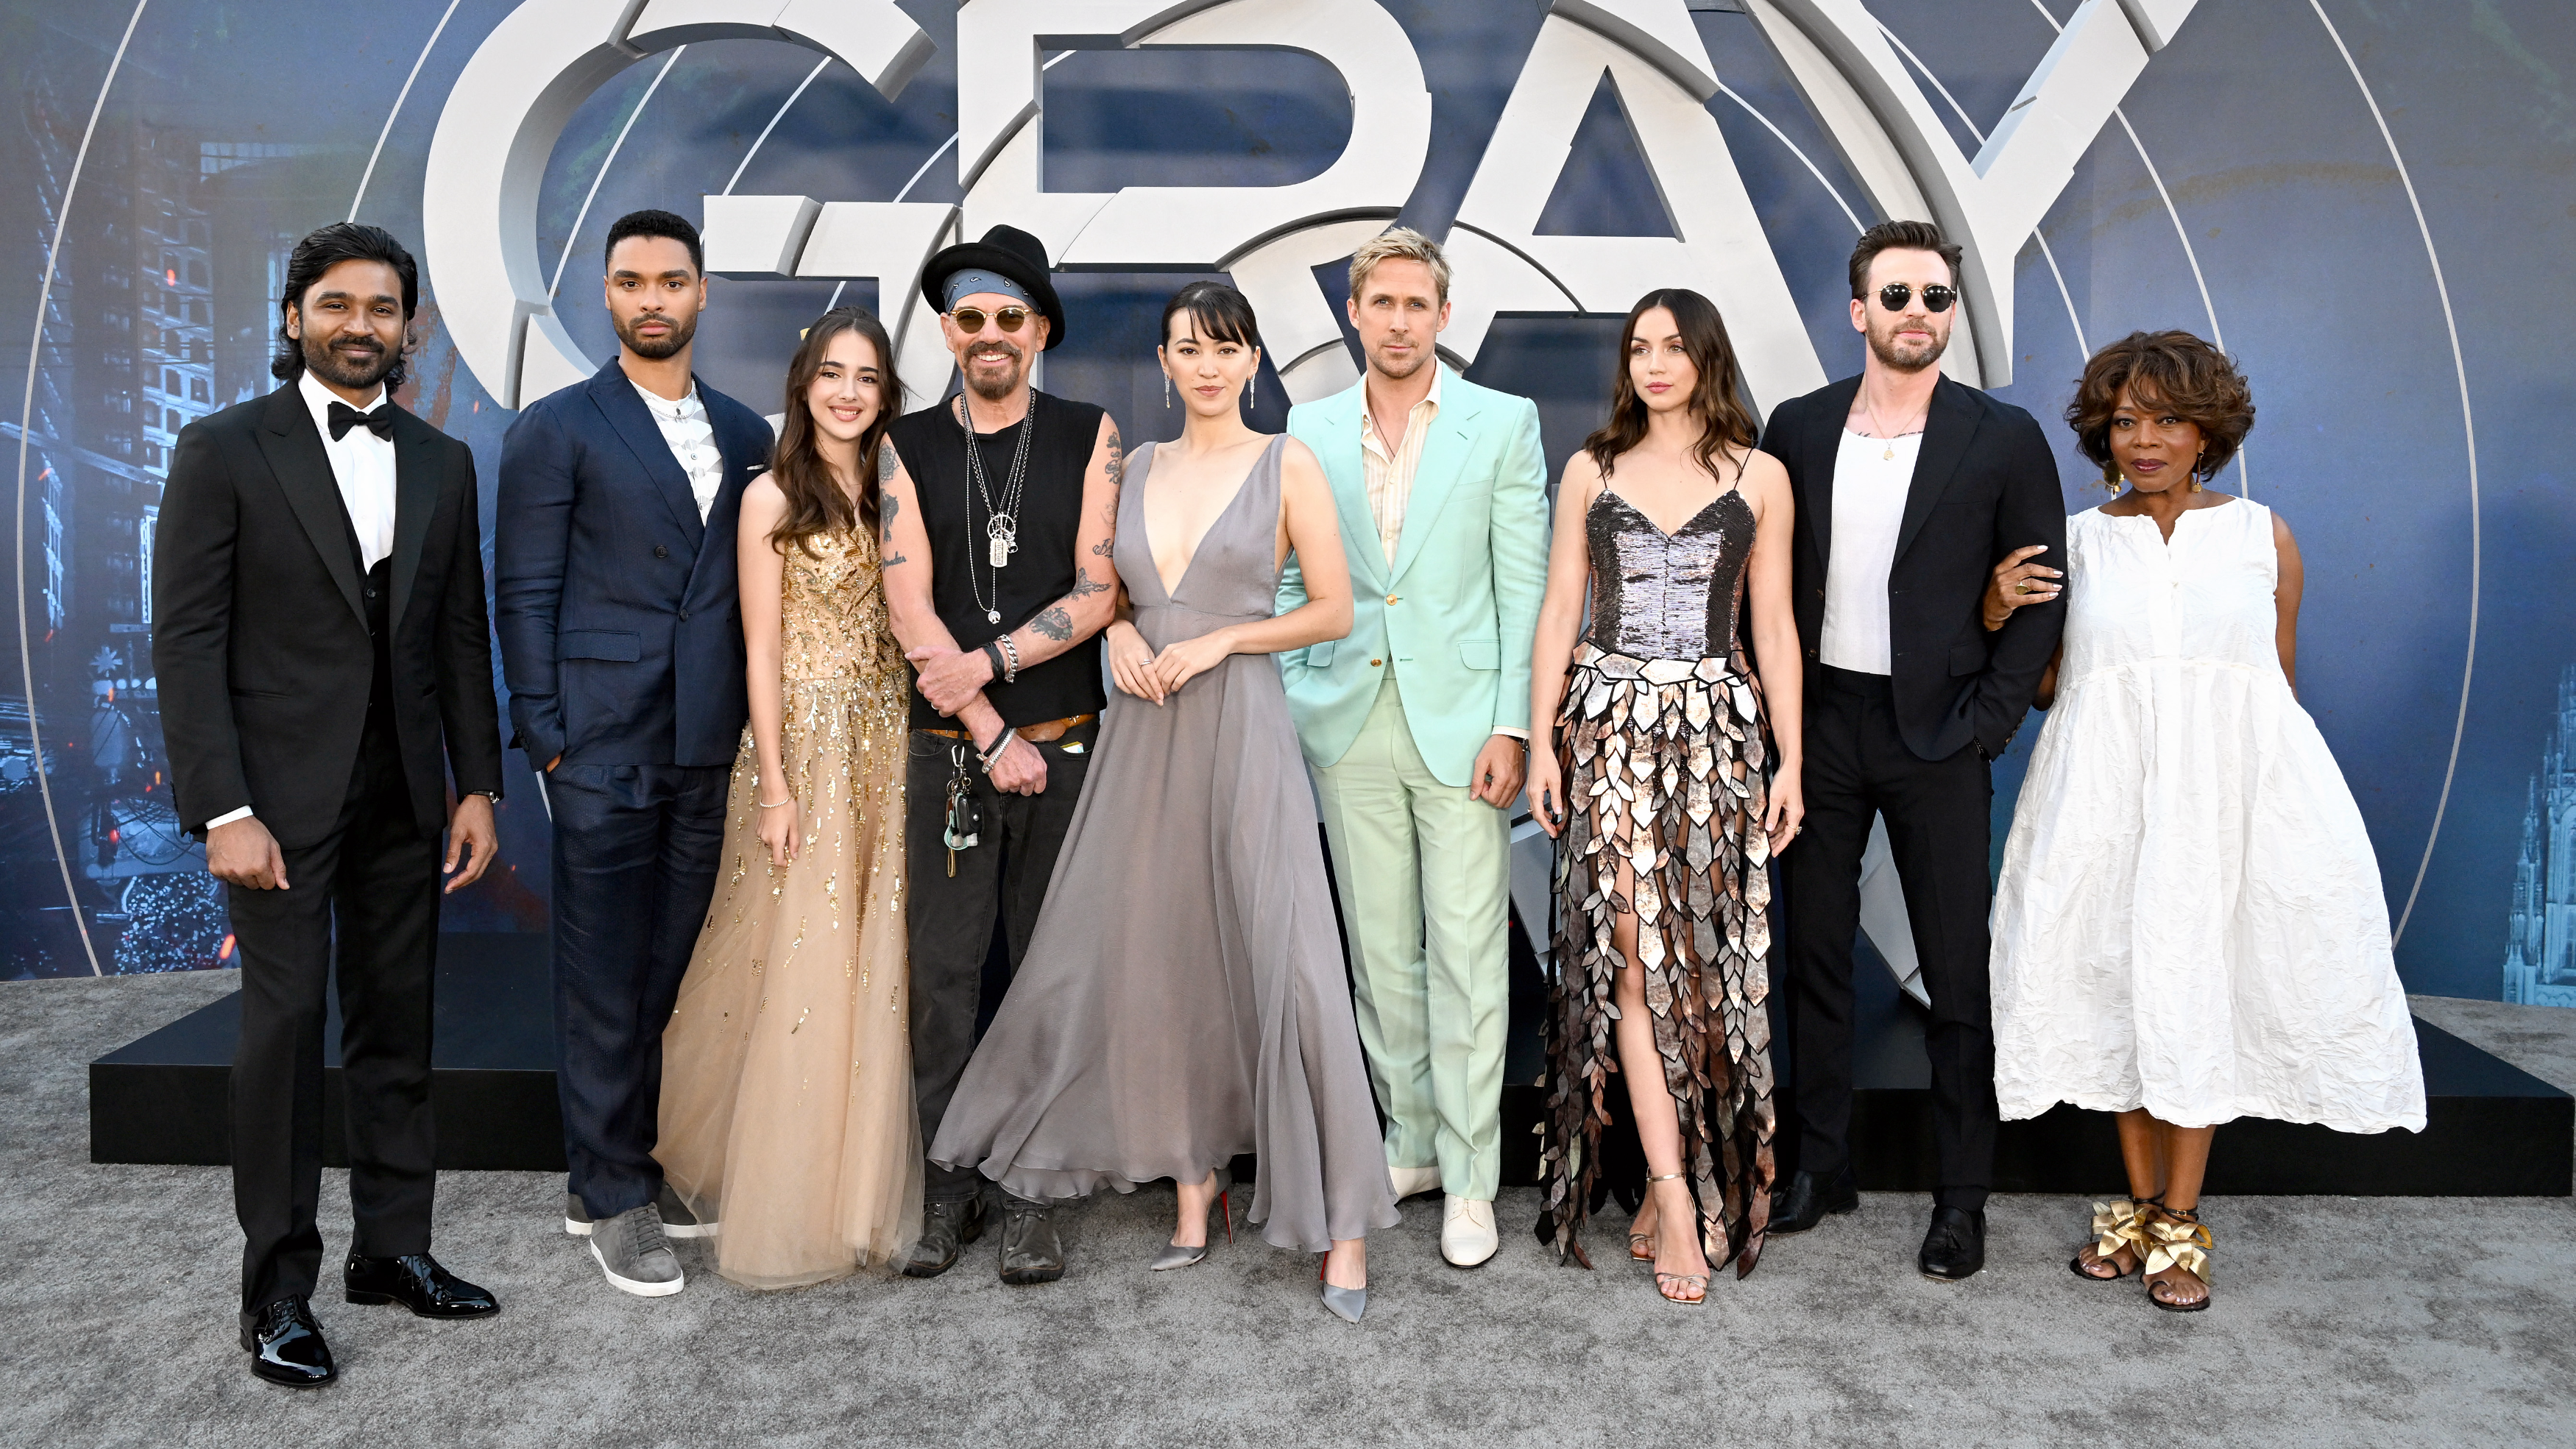 The Gray Man' 2 With Ryan Gosling Set at Netflix